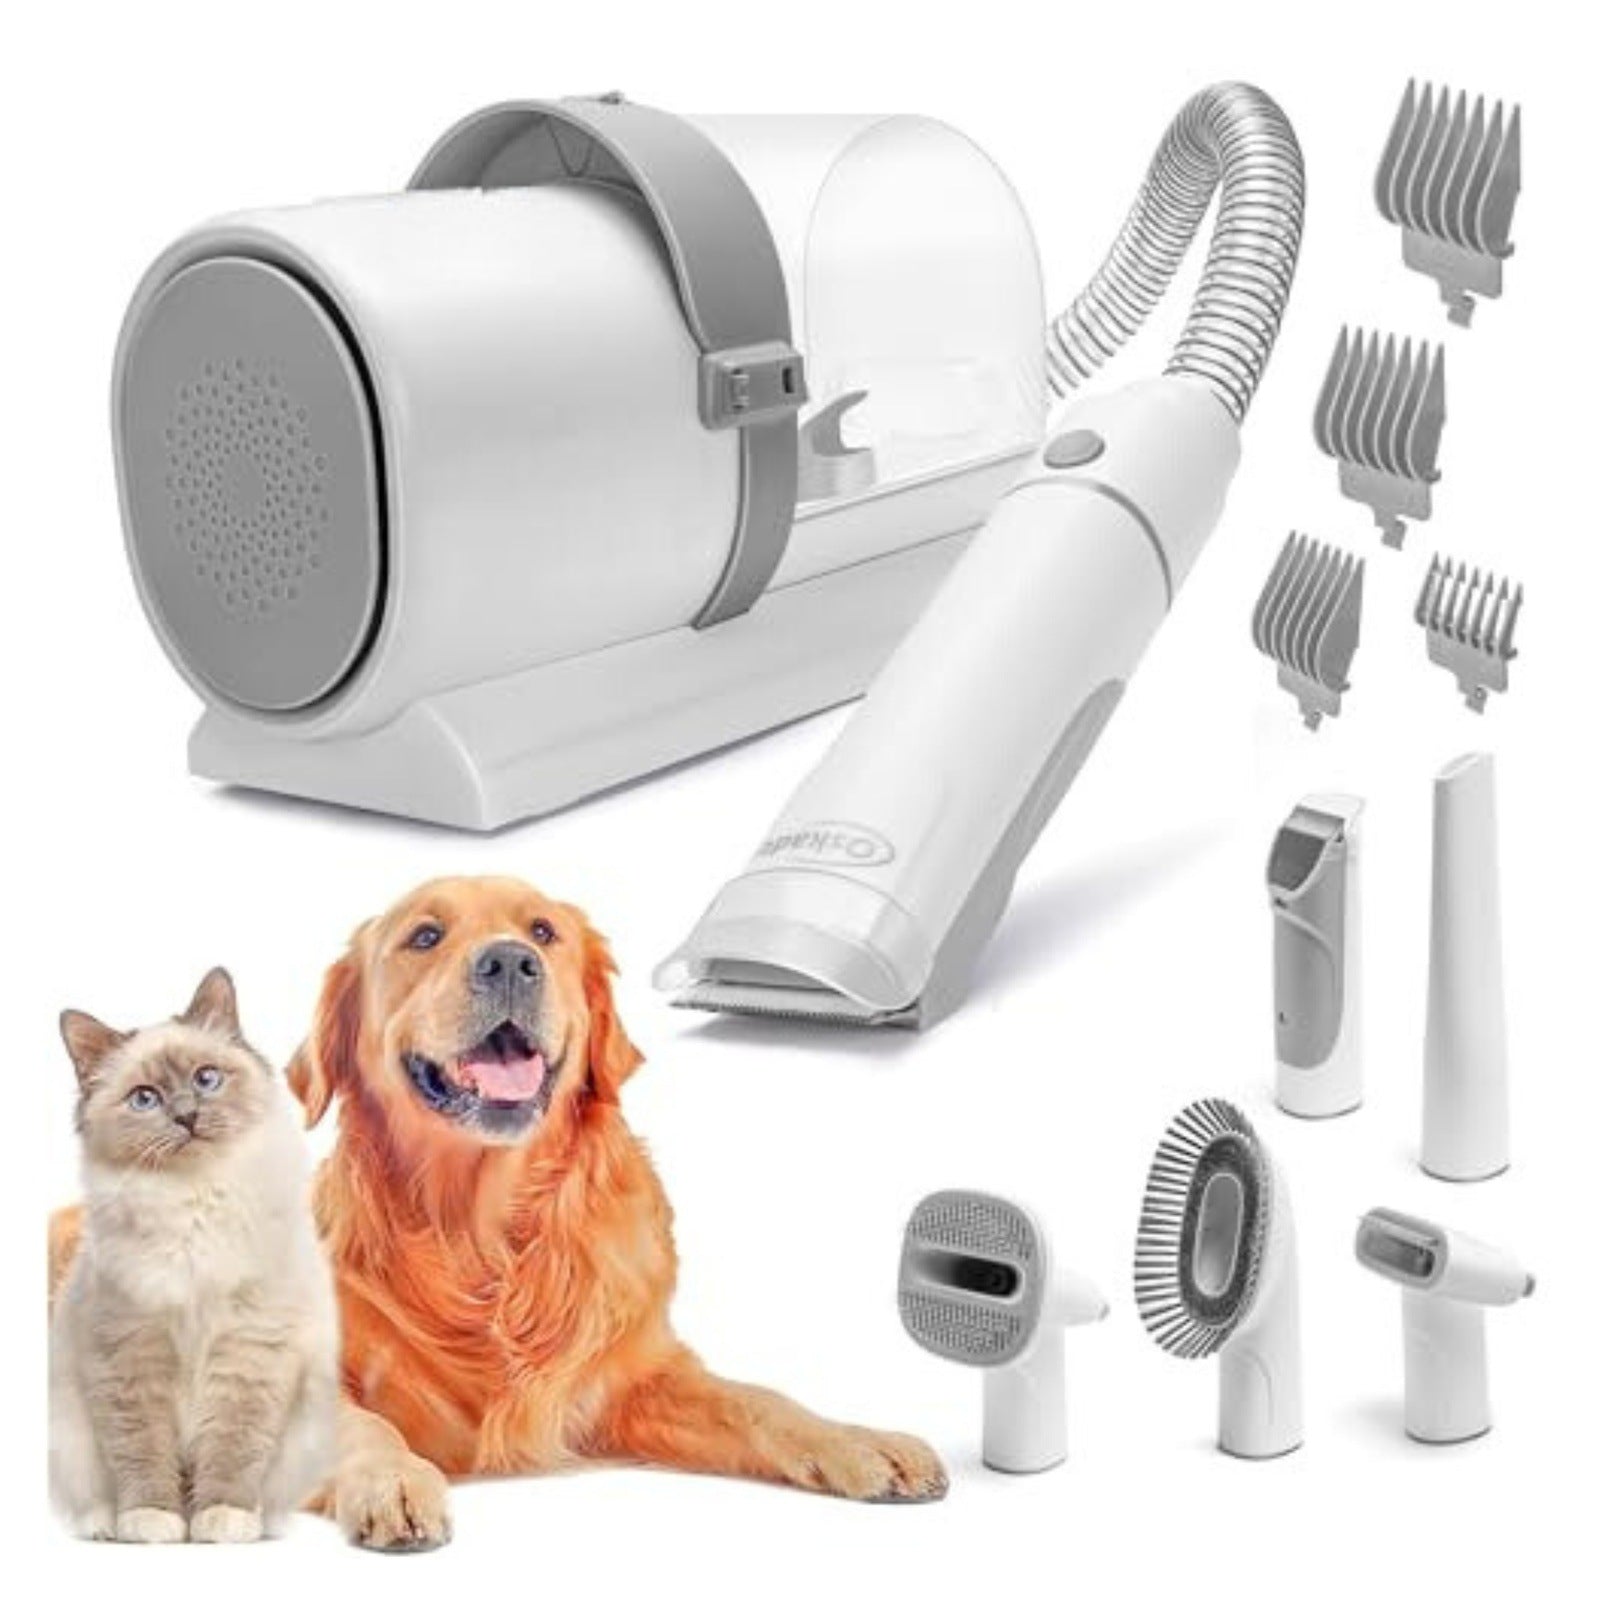 Xatory - Hondentondeuse - Trimmen - Verzorgingsset - Vacuum Grooming Kit - Hondenhaar - - Dogzoo